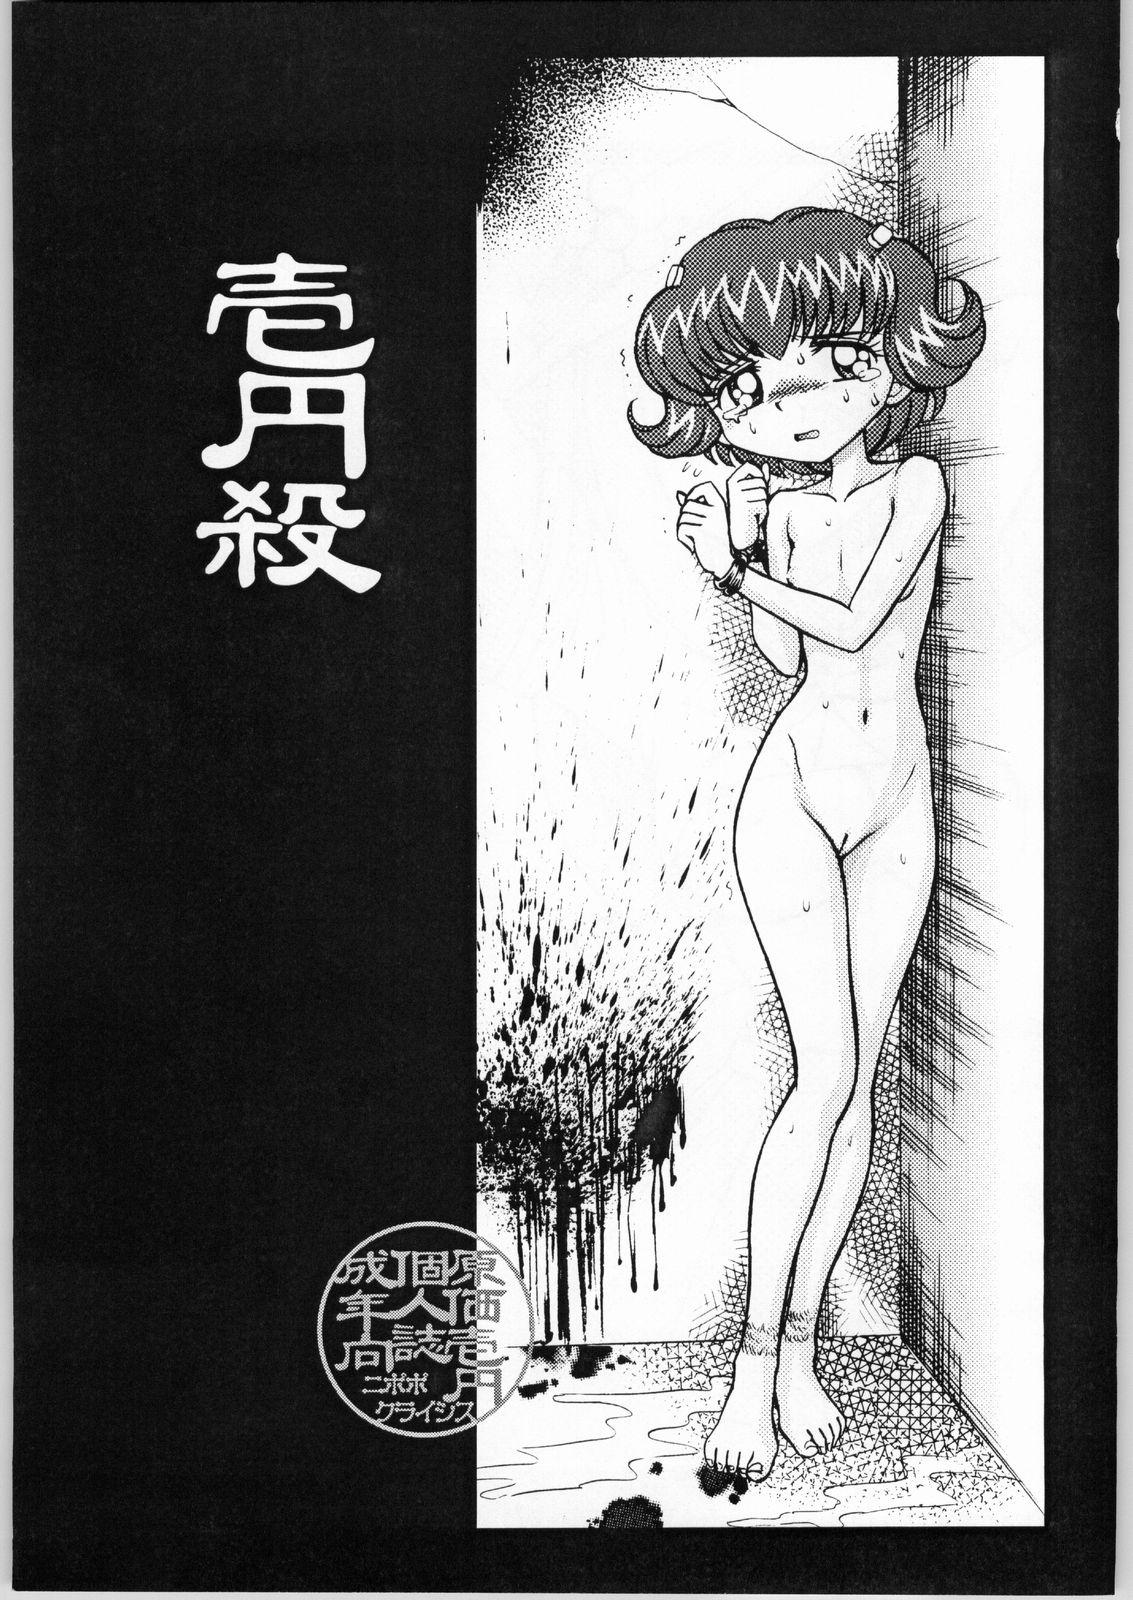 Couples Fucking Ichien Satsu - Ojamajo doremi Tenchi muyo Martian successor nadesico Turn a gundam Hand maid may Medabots Hamtaro Abuse - Page 2